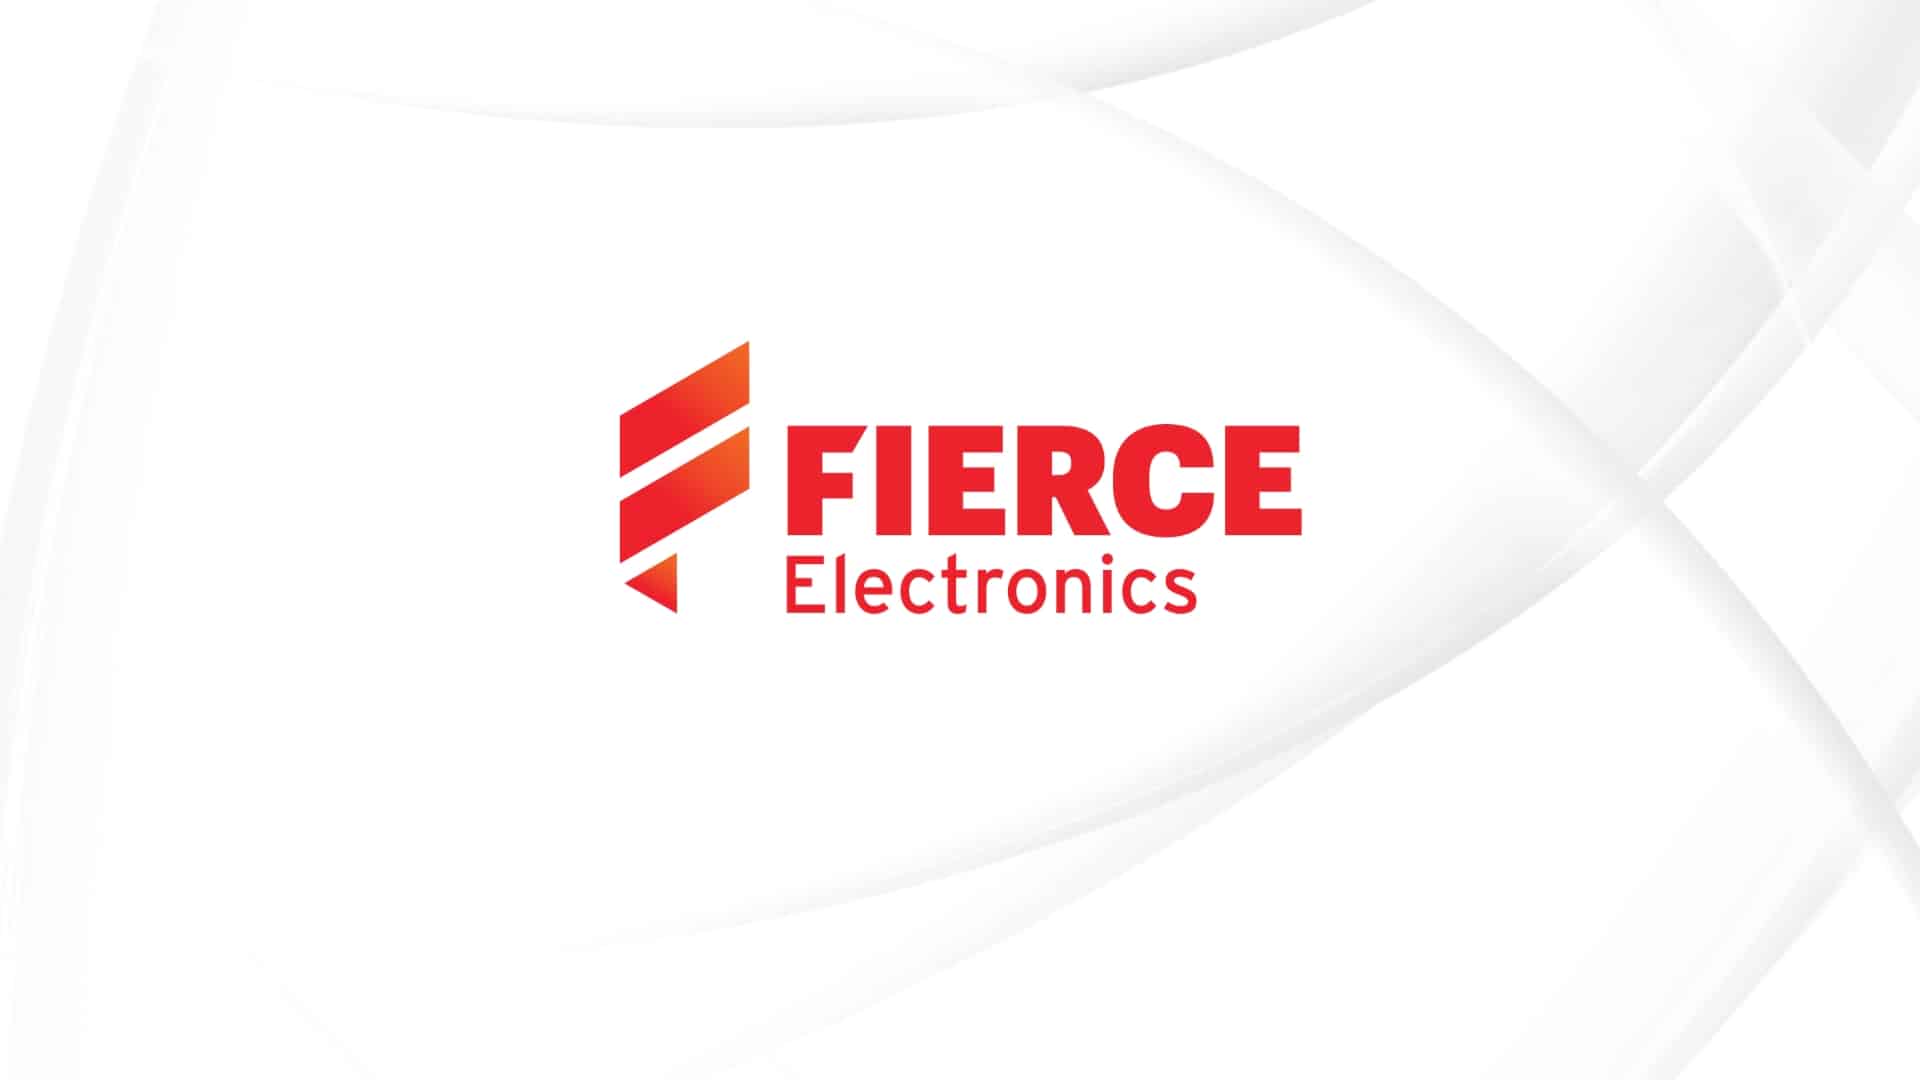 Fierce Electronics Logo